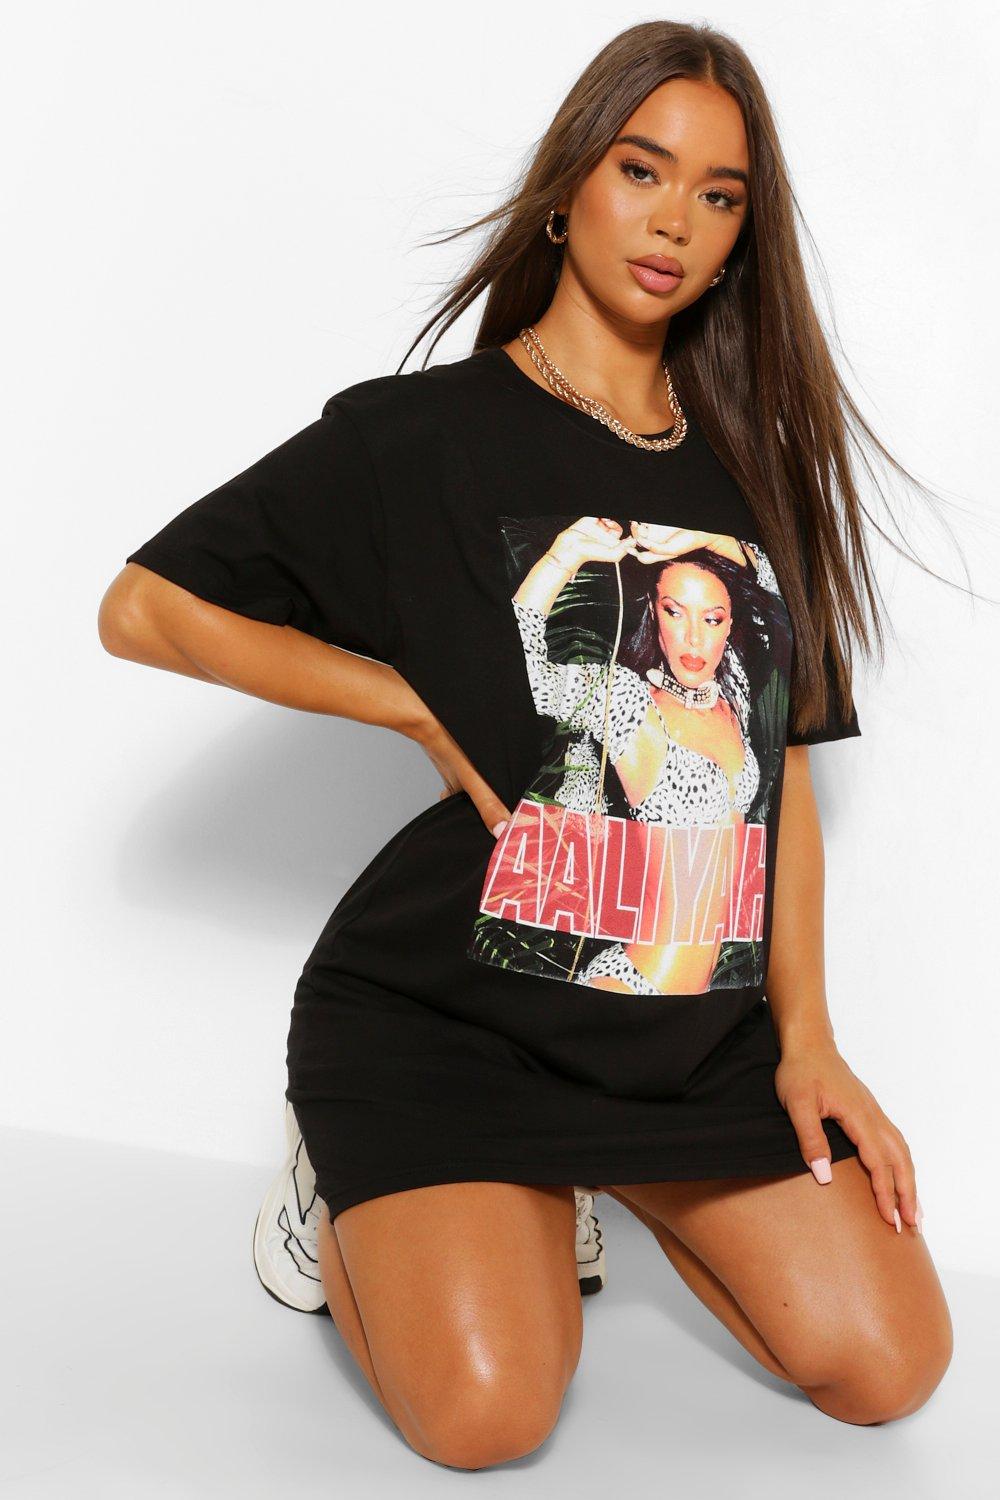 In Memory of Aaliyah Shirt: Halsey and Hailey Baldwin Both Wore